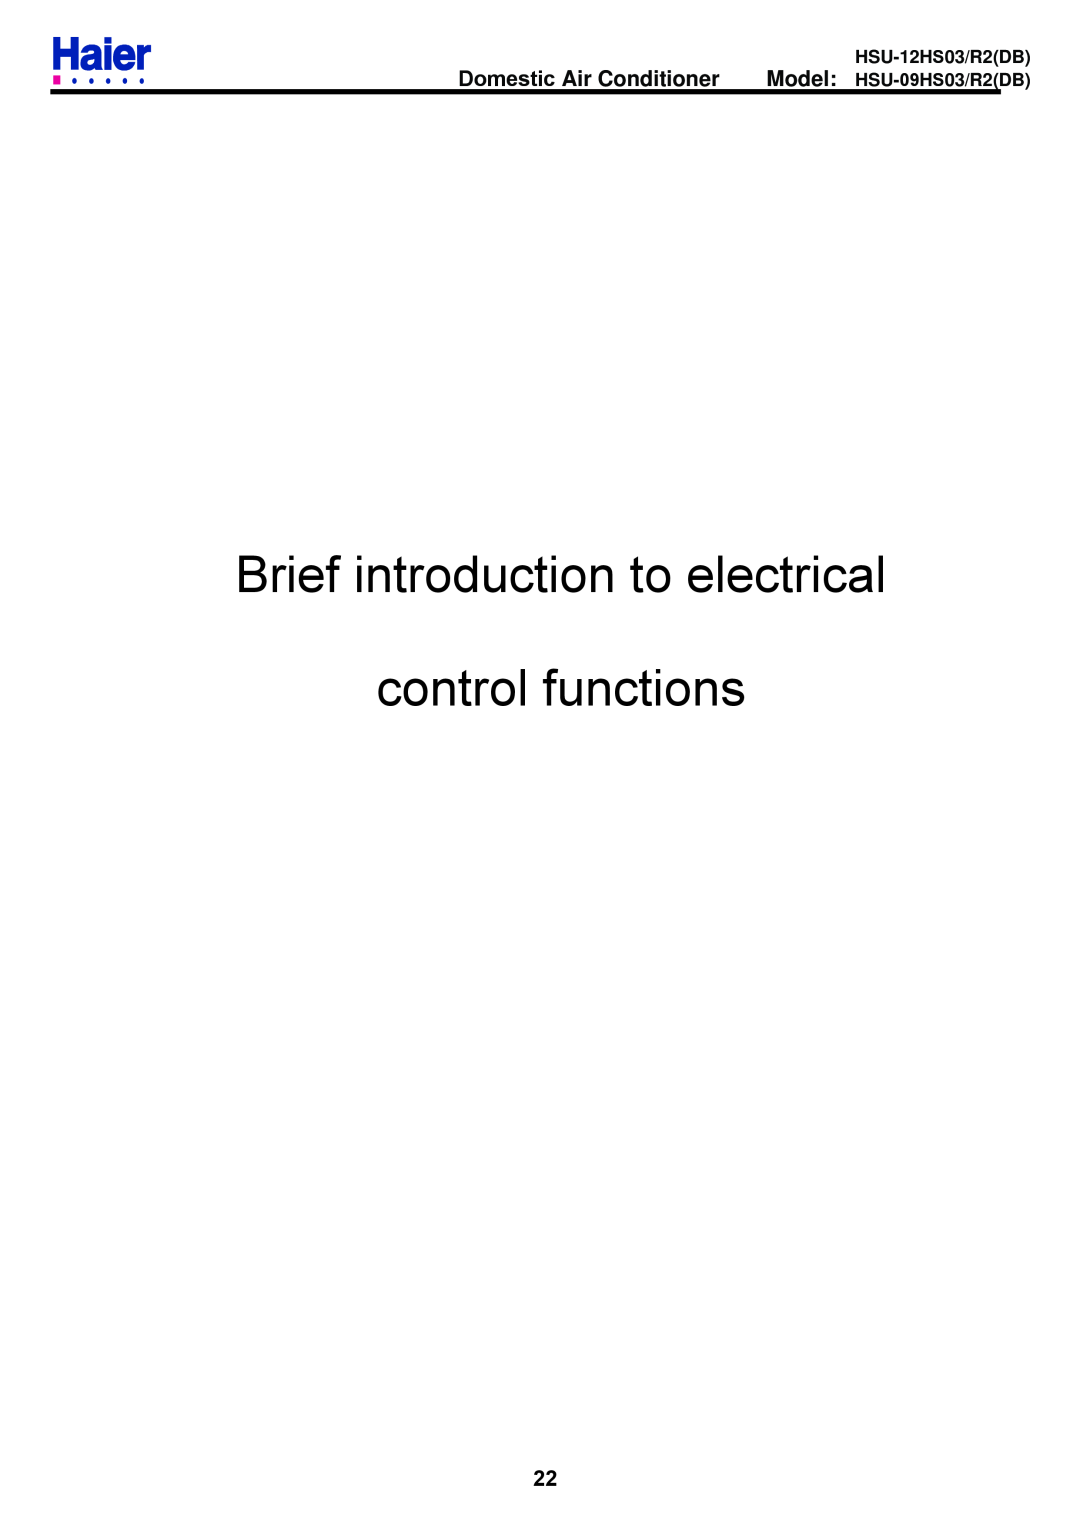 Haier HSU-09HS03/R2DB Brief introduction to electrical control functions, Domestic Air Conditioner, HSU-12HS03/R2DB 